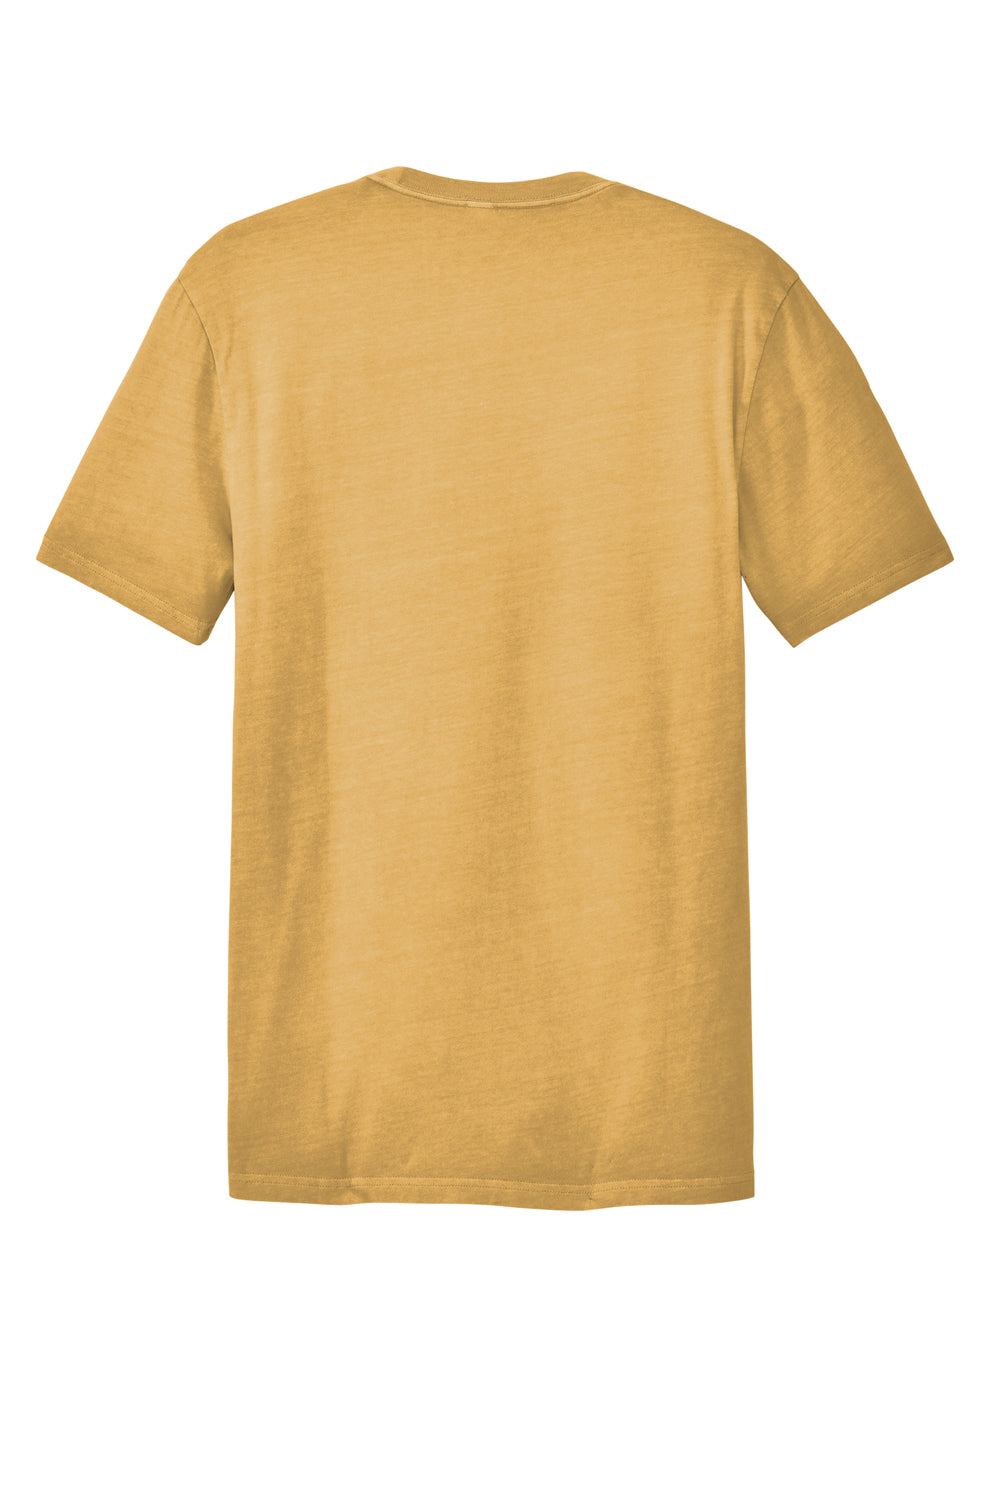 Allmade AL2400 Mens Mineral Dye Short Sleeve Crewneck T-Shirt Golden Wheat Flat Back